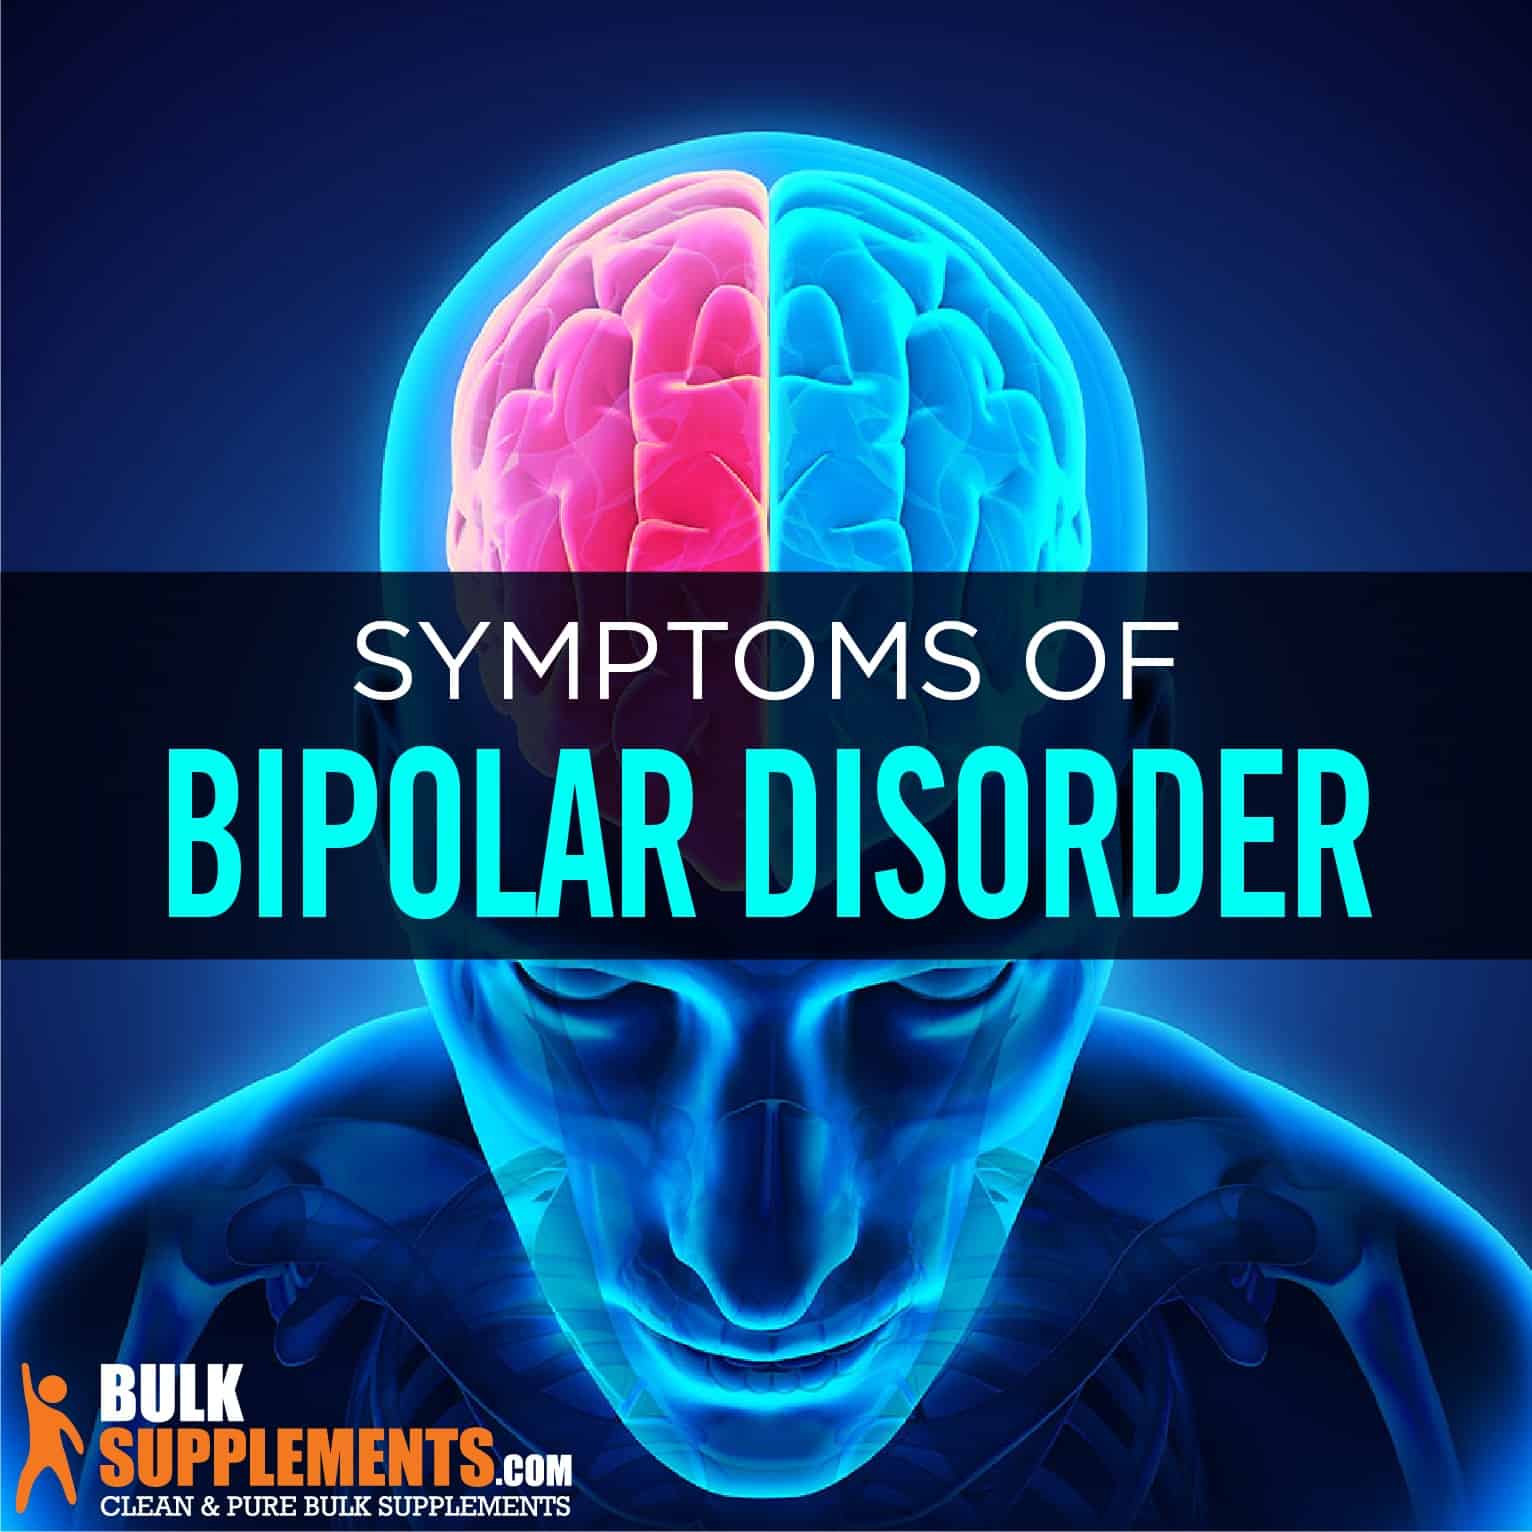 Bipolar Disorder: Symptoms, Causes & Treatment by James Denlinger